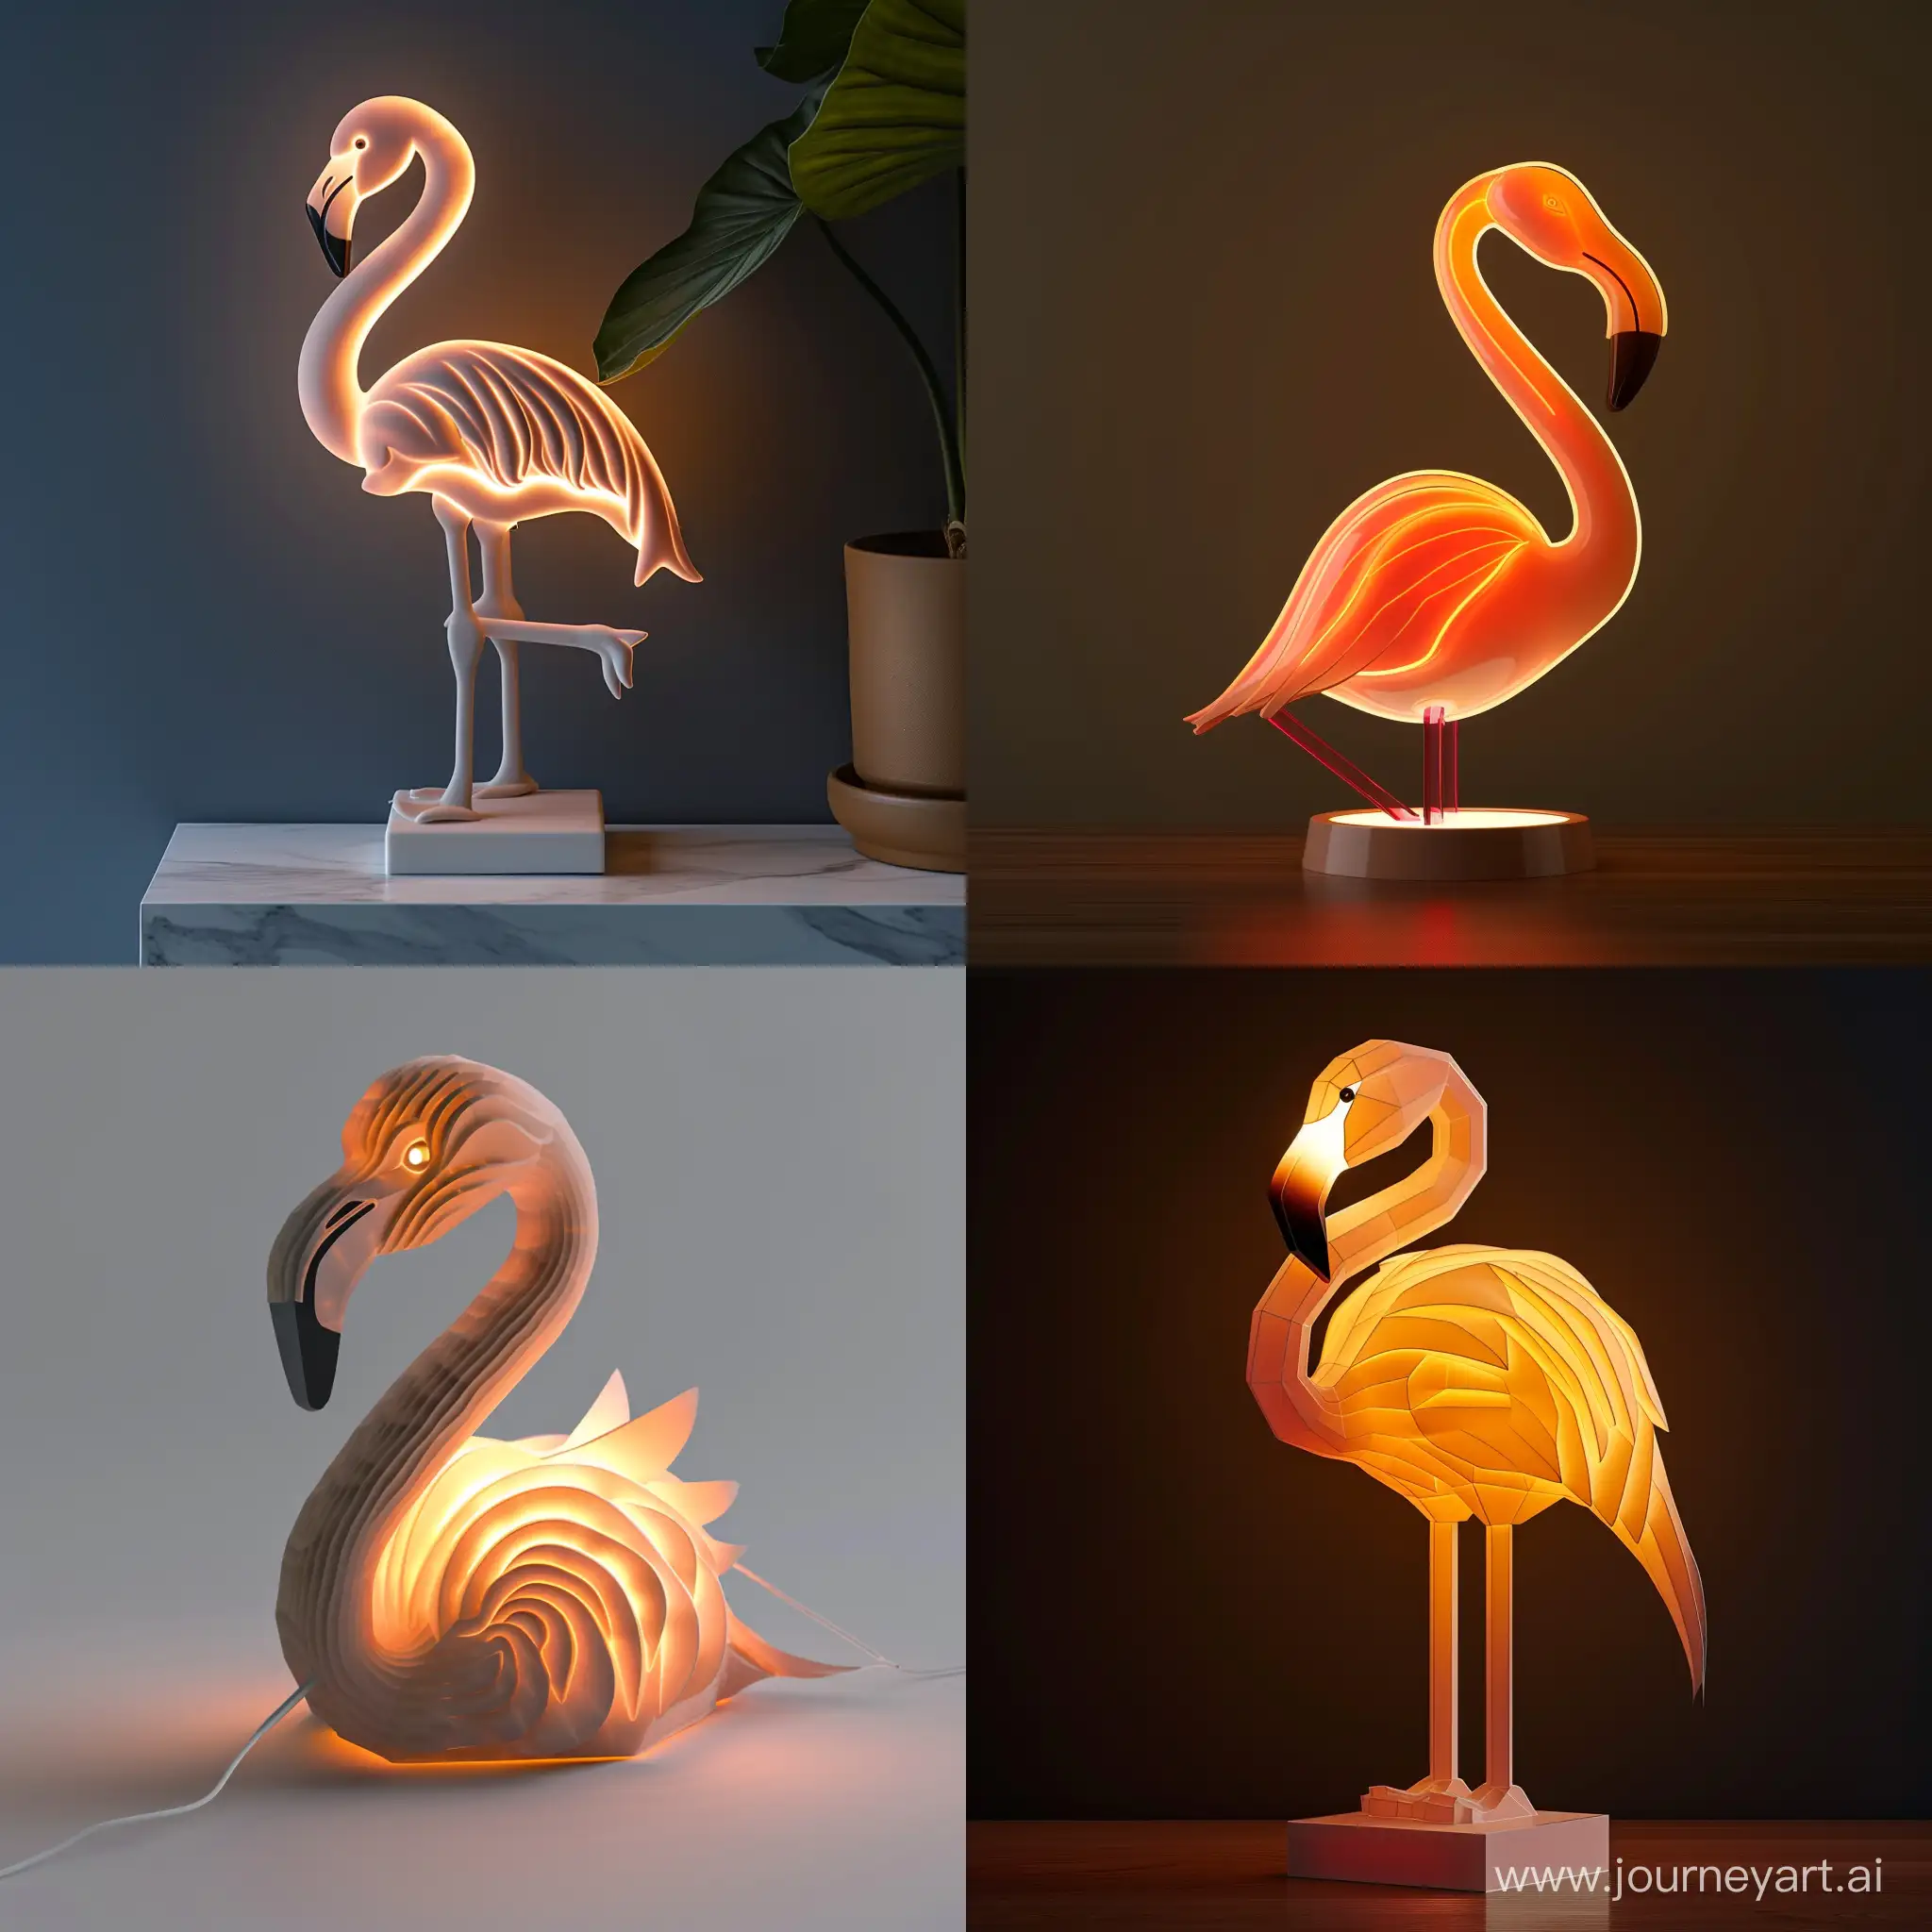 Elegant-Flamingo-Lighting-Unit-Design-with-Versatility-and-Artistic-Appeal